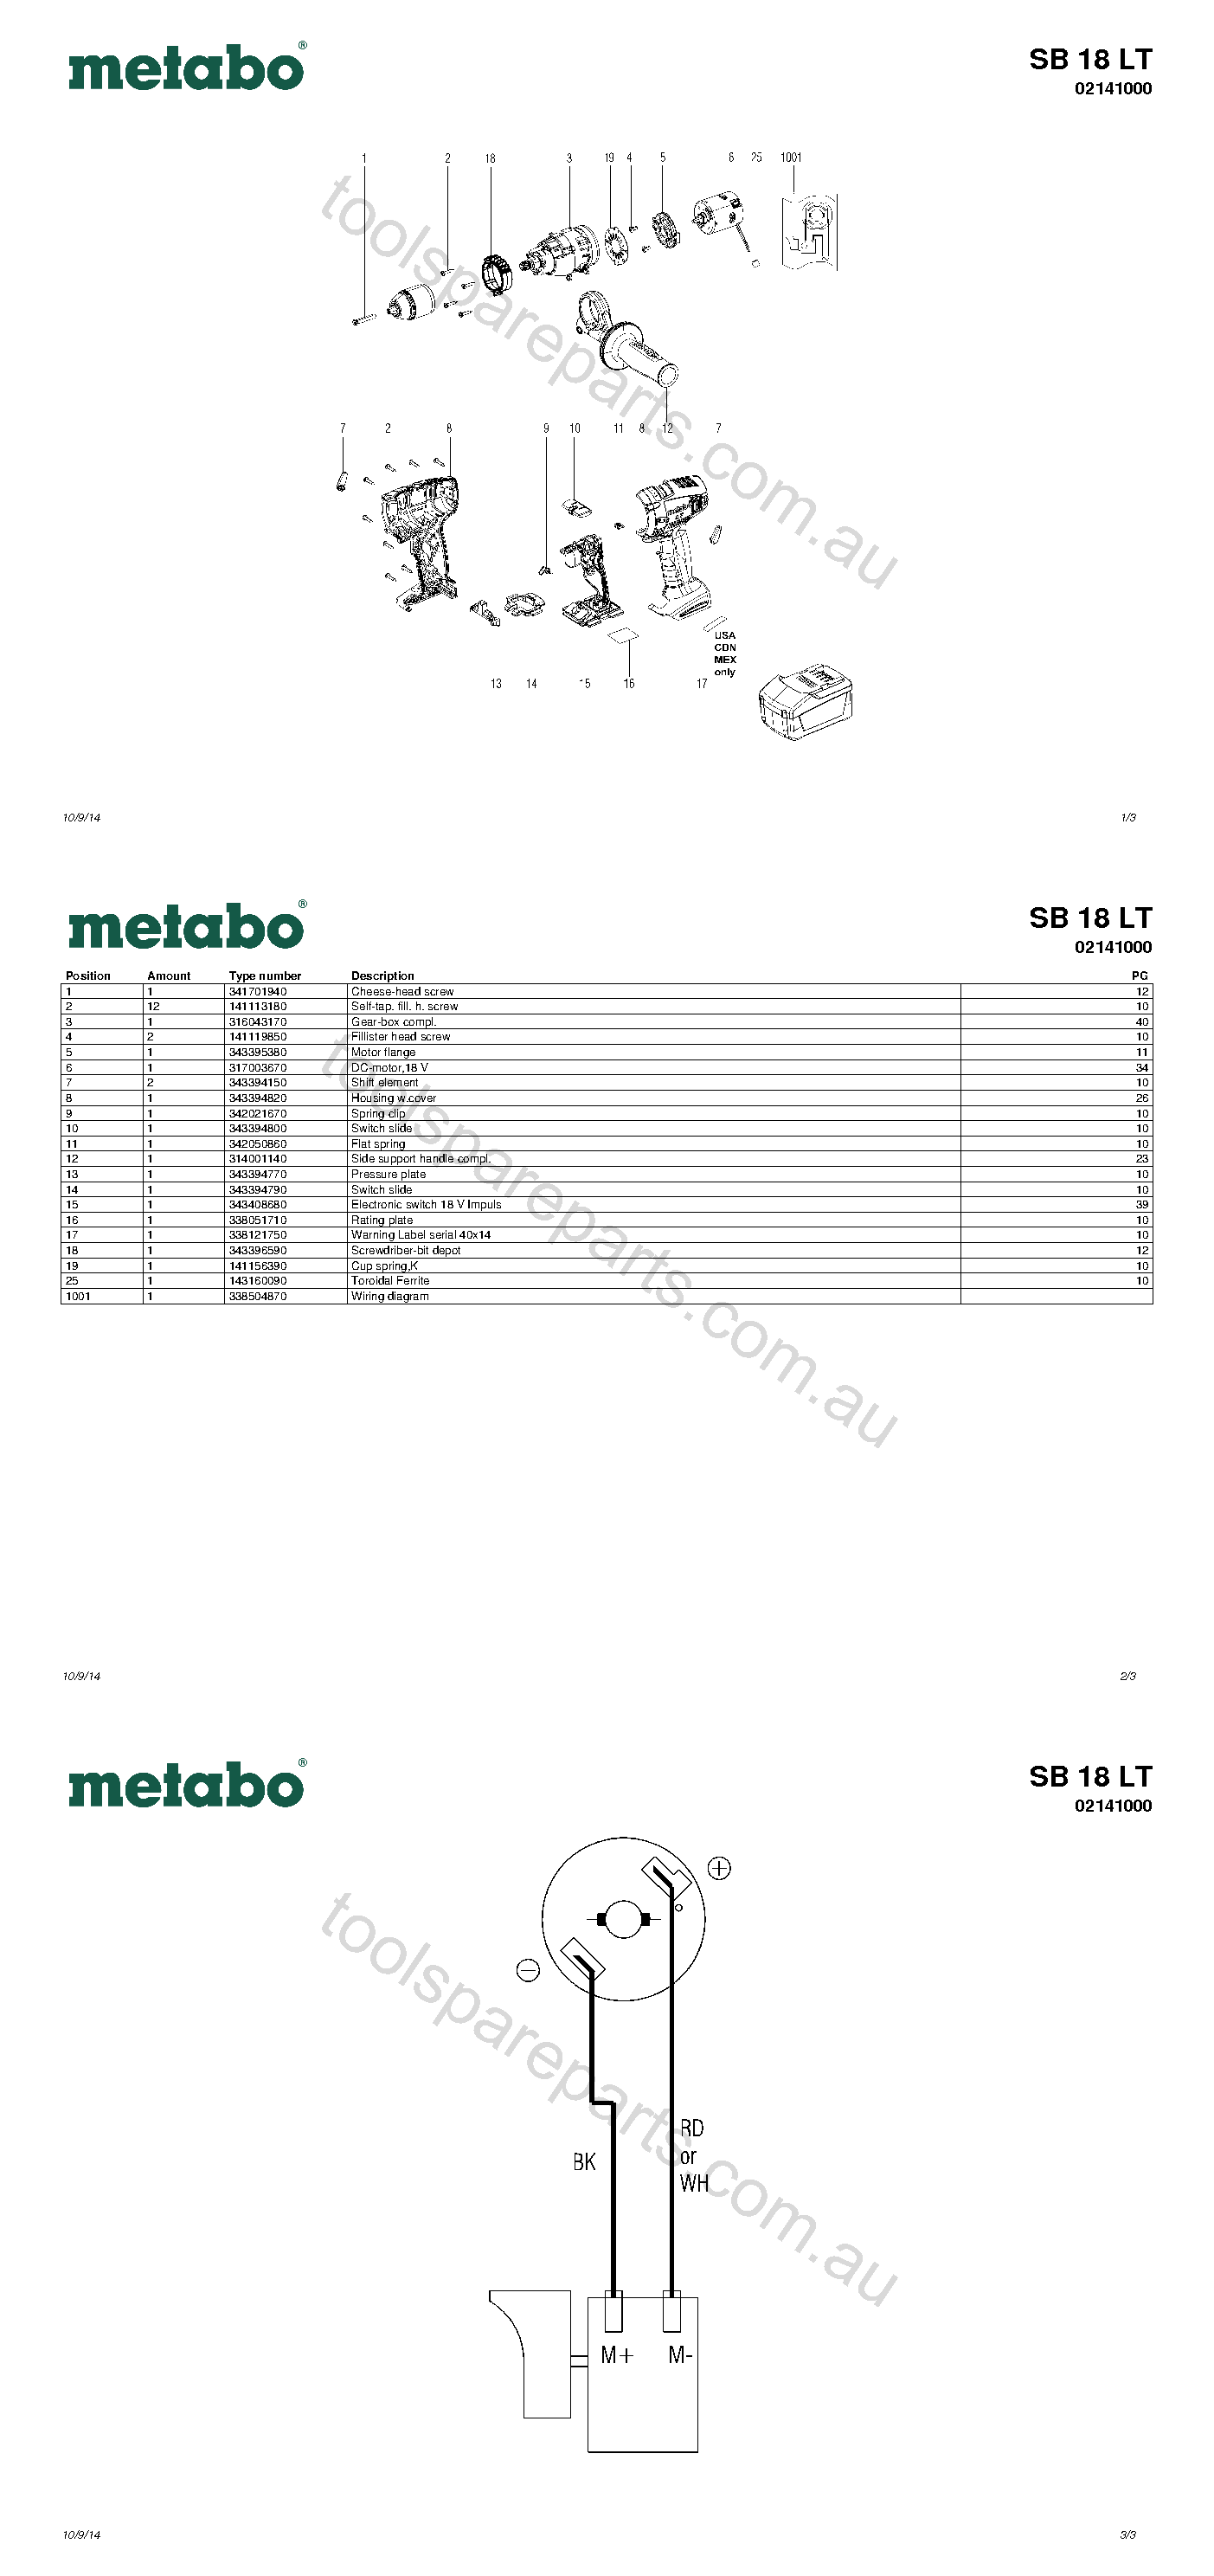 Metabo SB 18 LT 02141000  Diagram 1